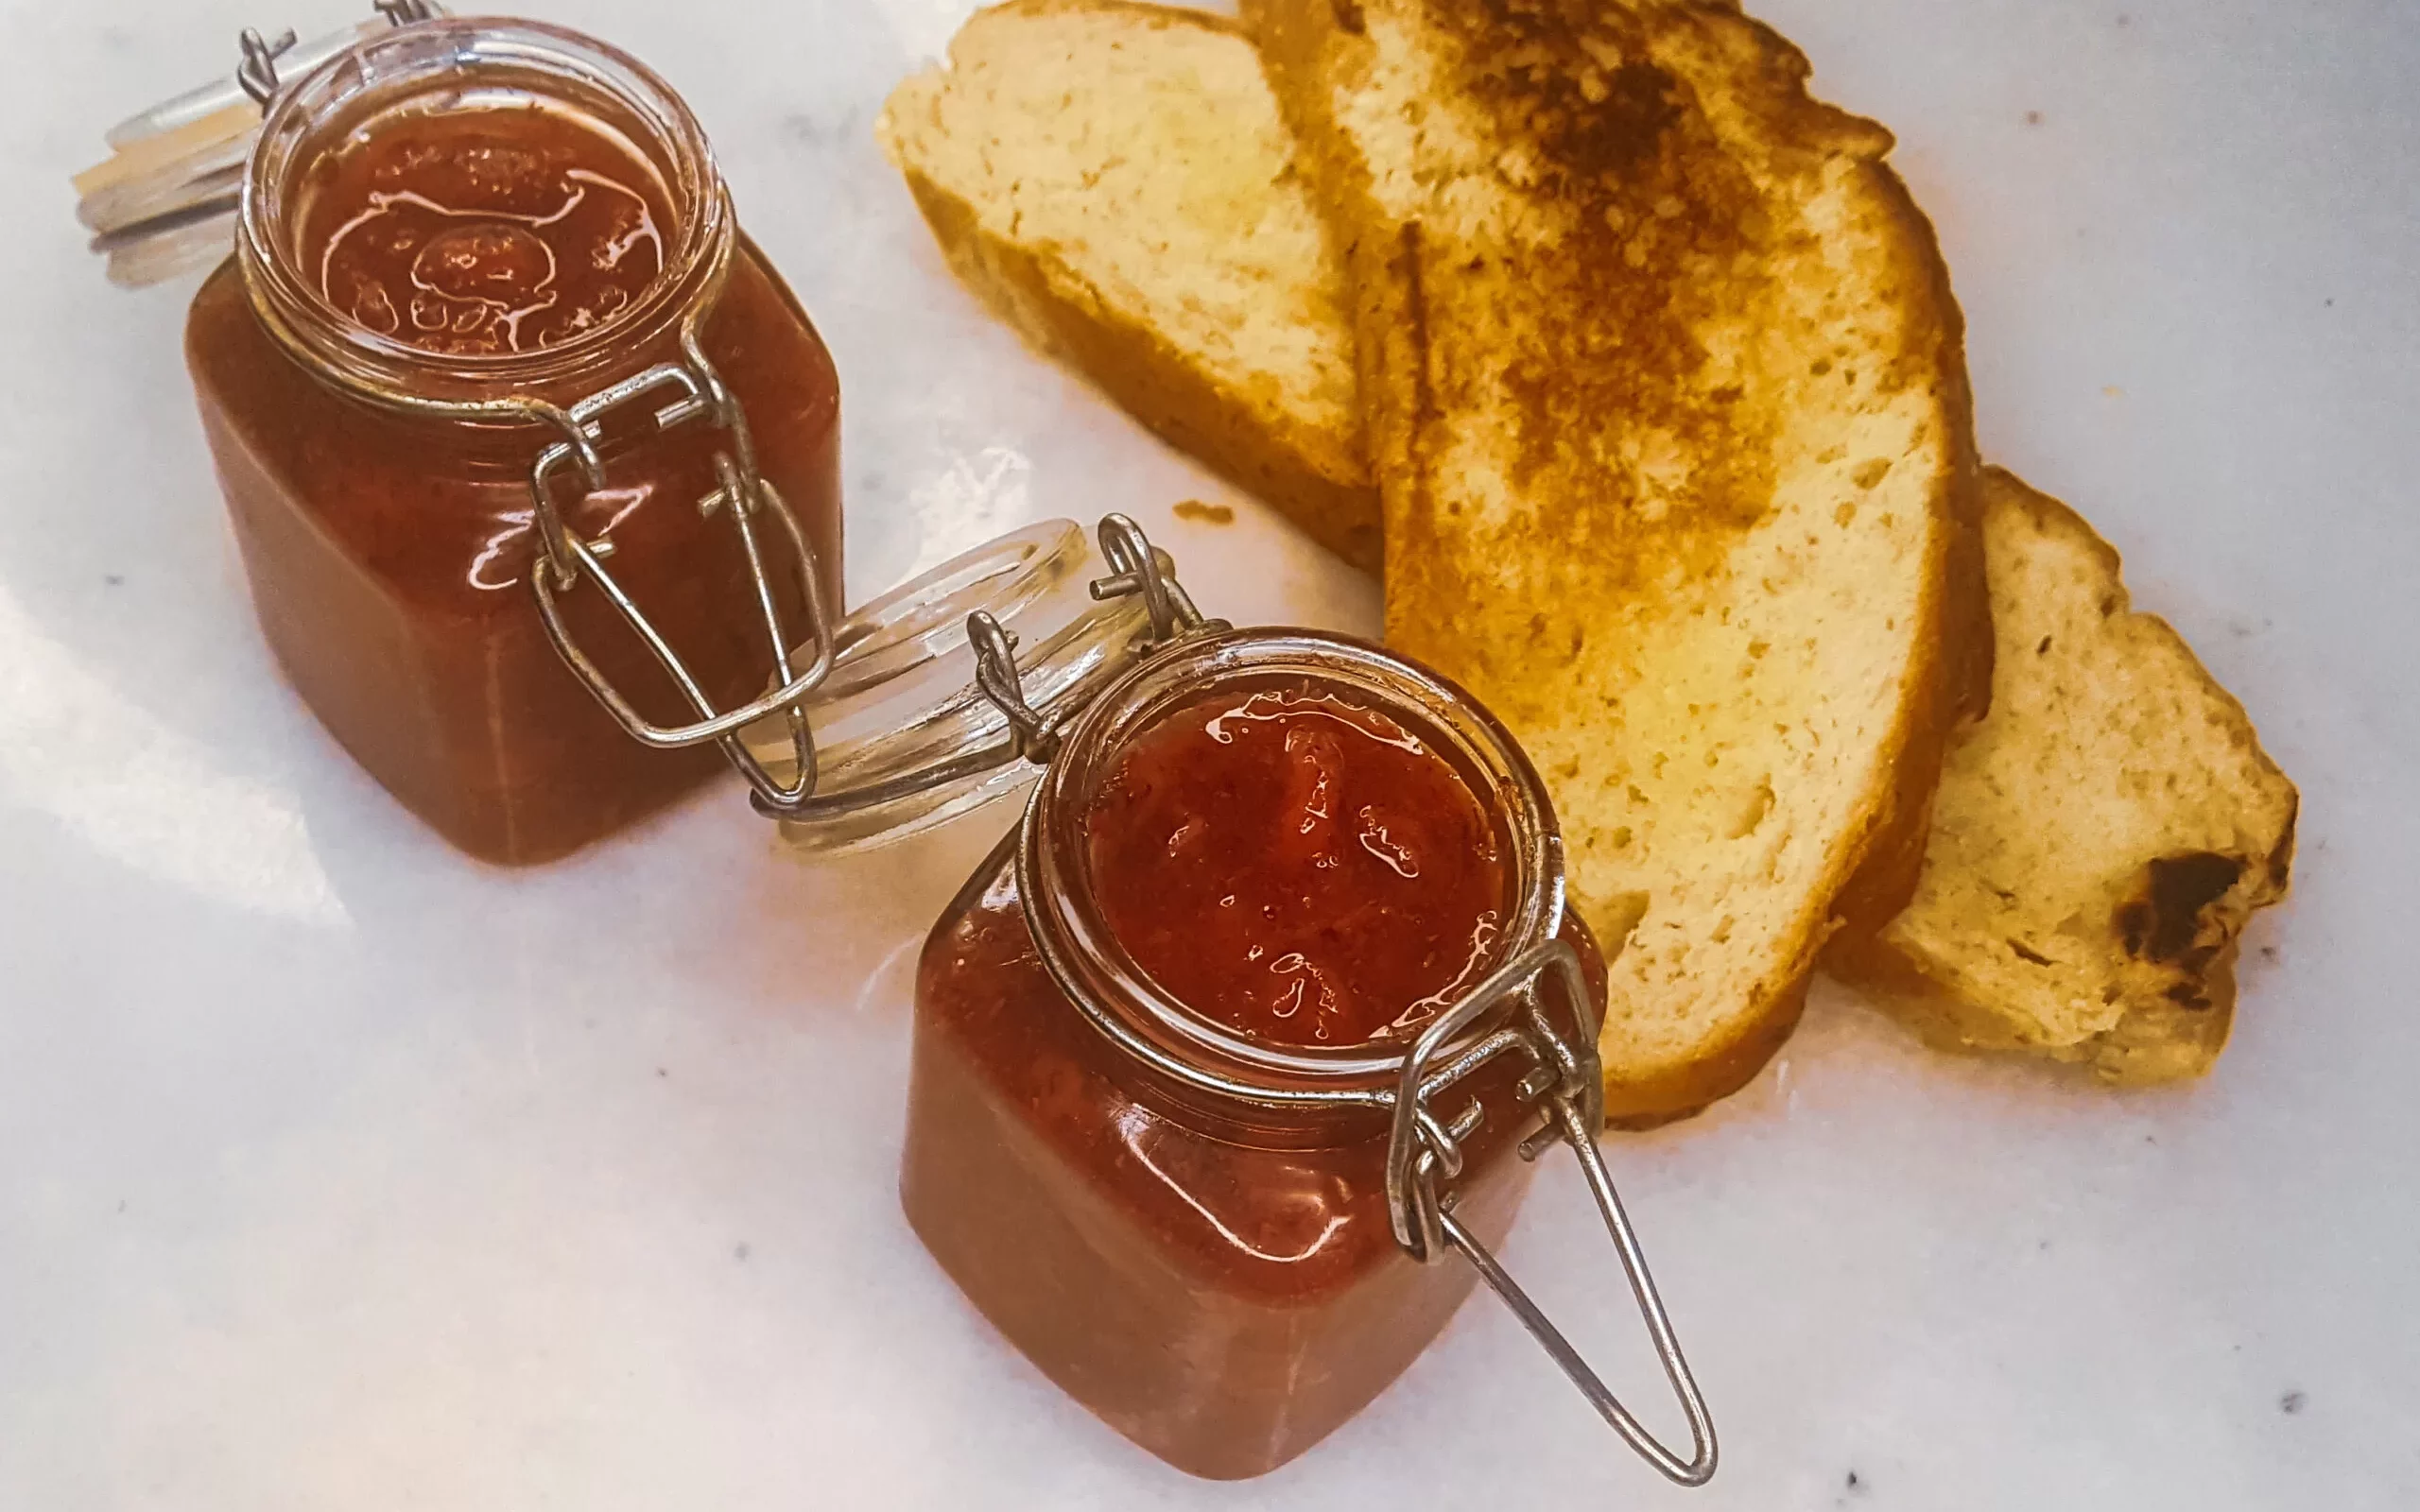 Sugar-free strawberry jam with gluten-free bread.